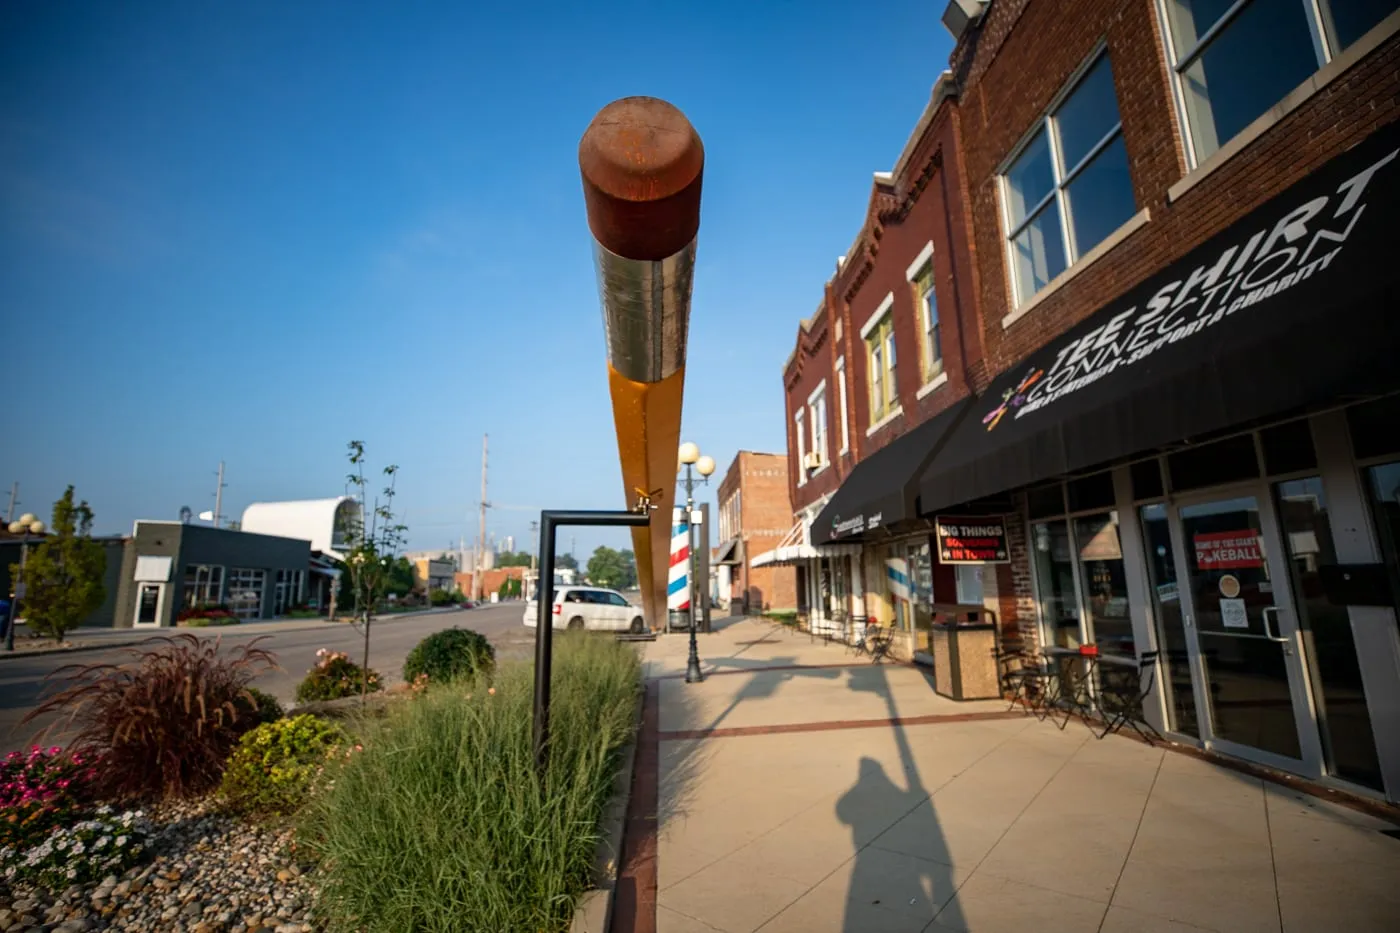 Big Pencil in Casey, Illinois roadside attraction